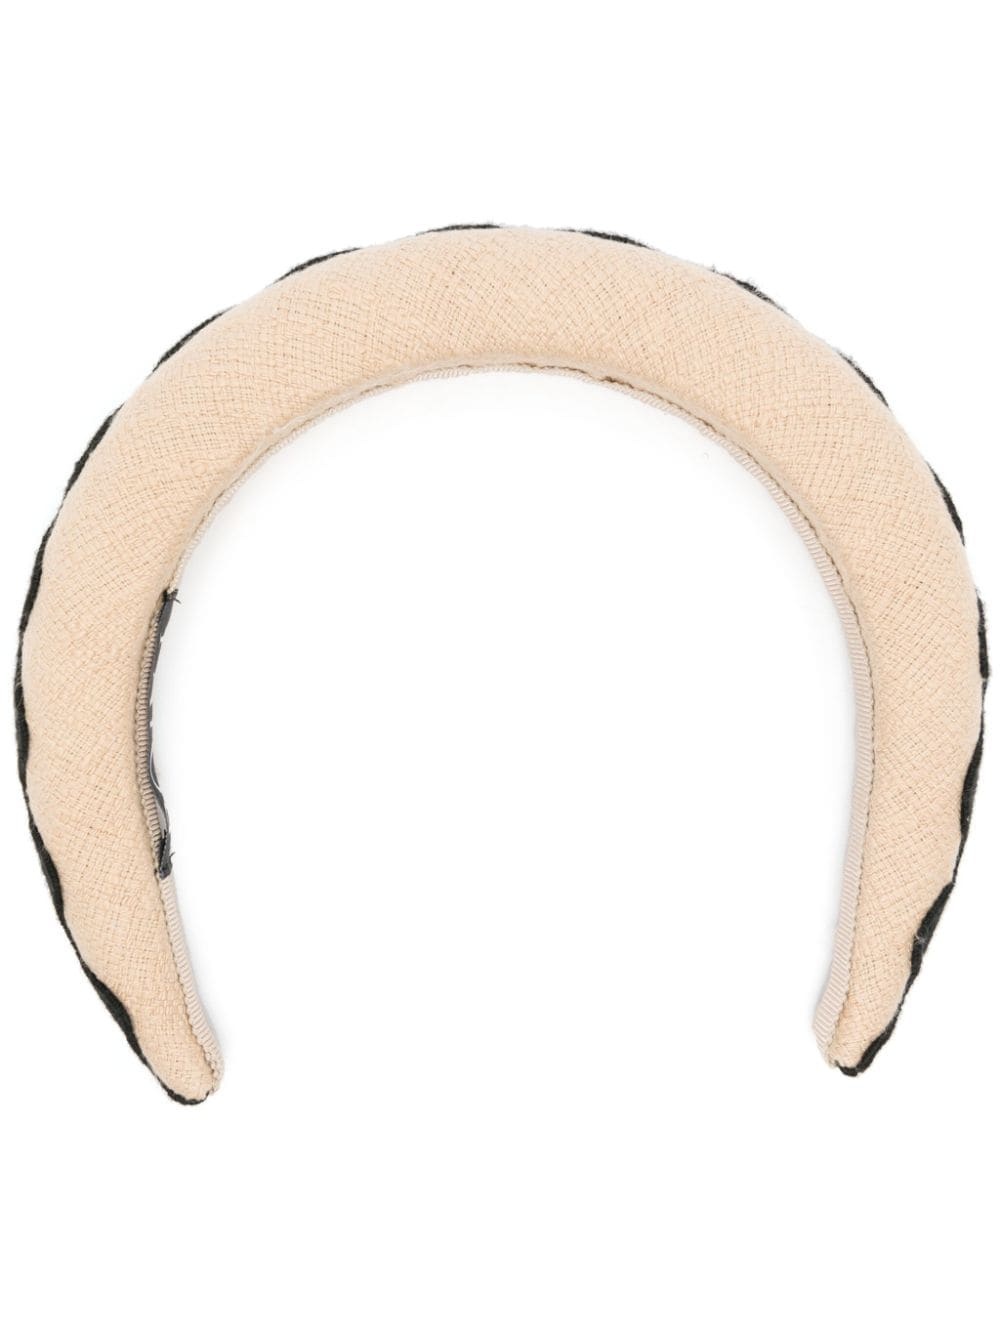 interwoven padded head band - 1